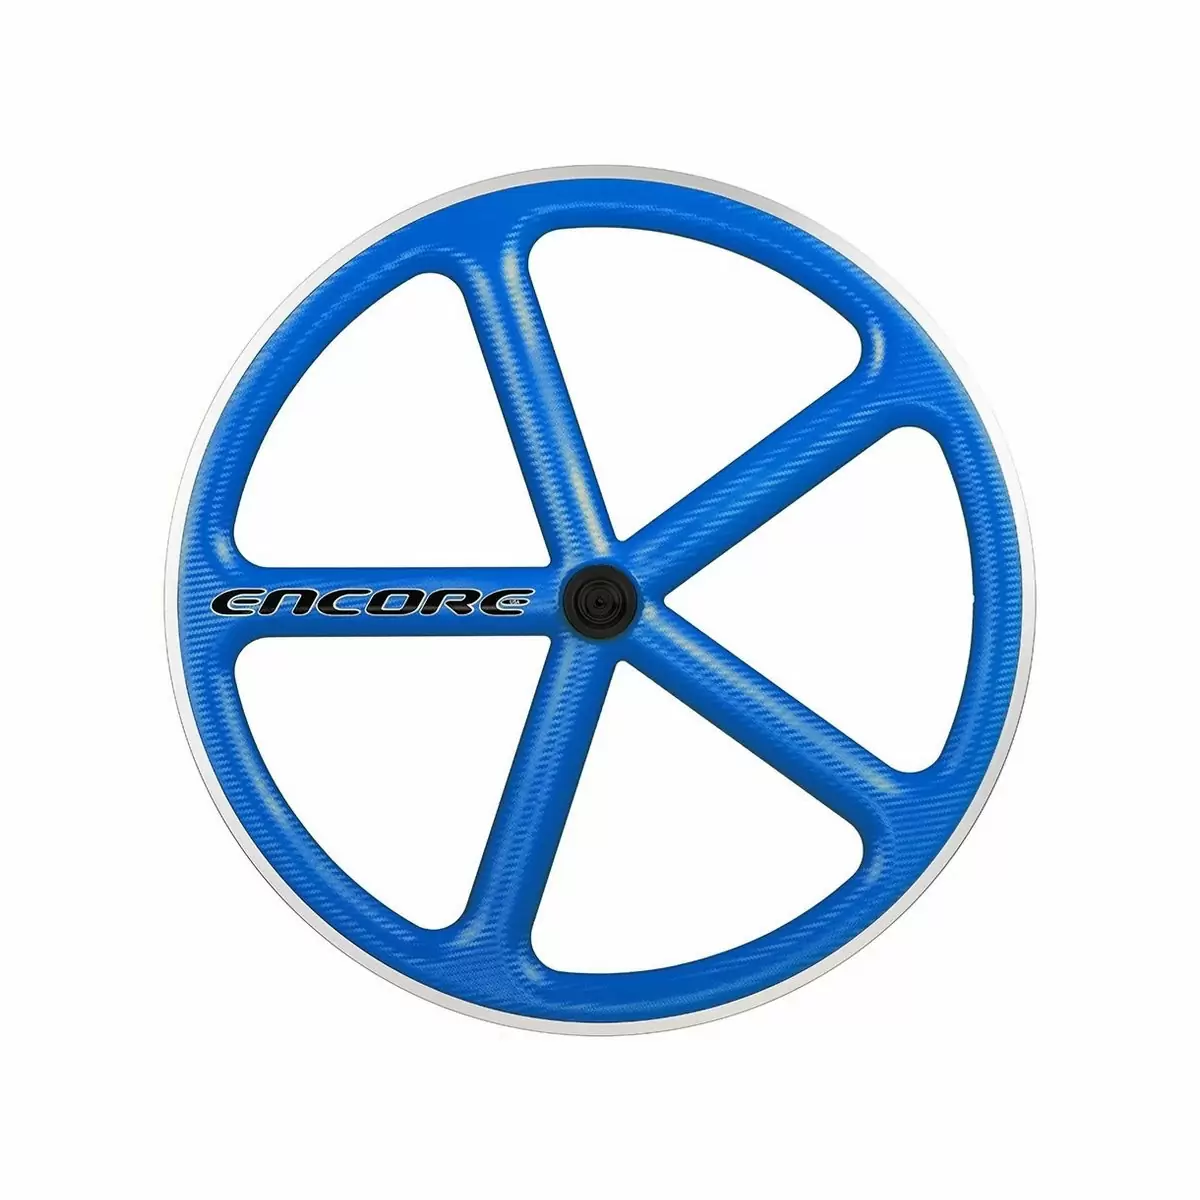 roue arrière 700c track 5 rayons carbone tissage bleu msw - image